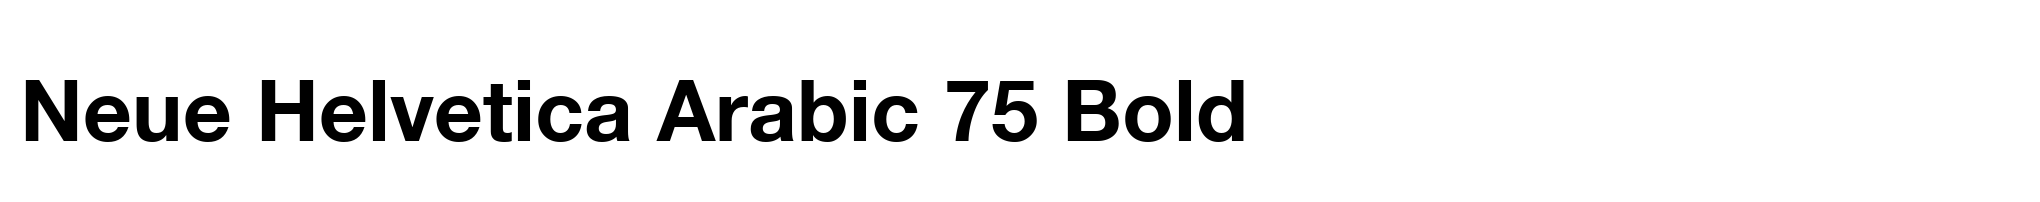 Neue Helvetica Arabic 75 Bold image